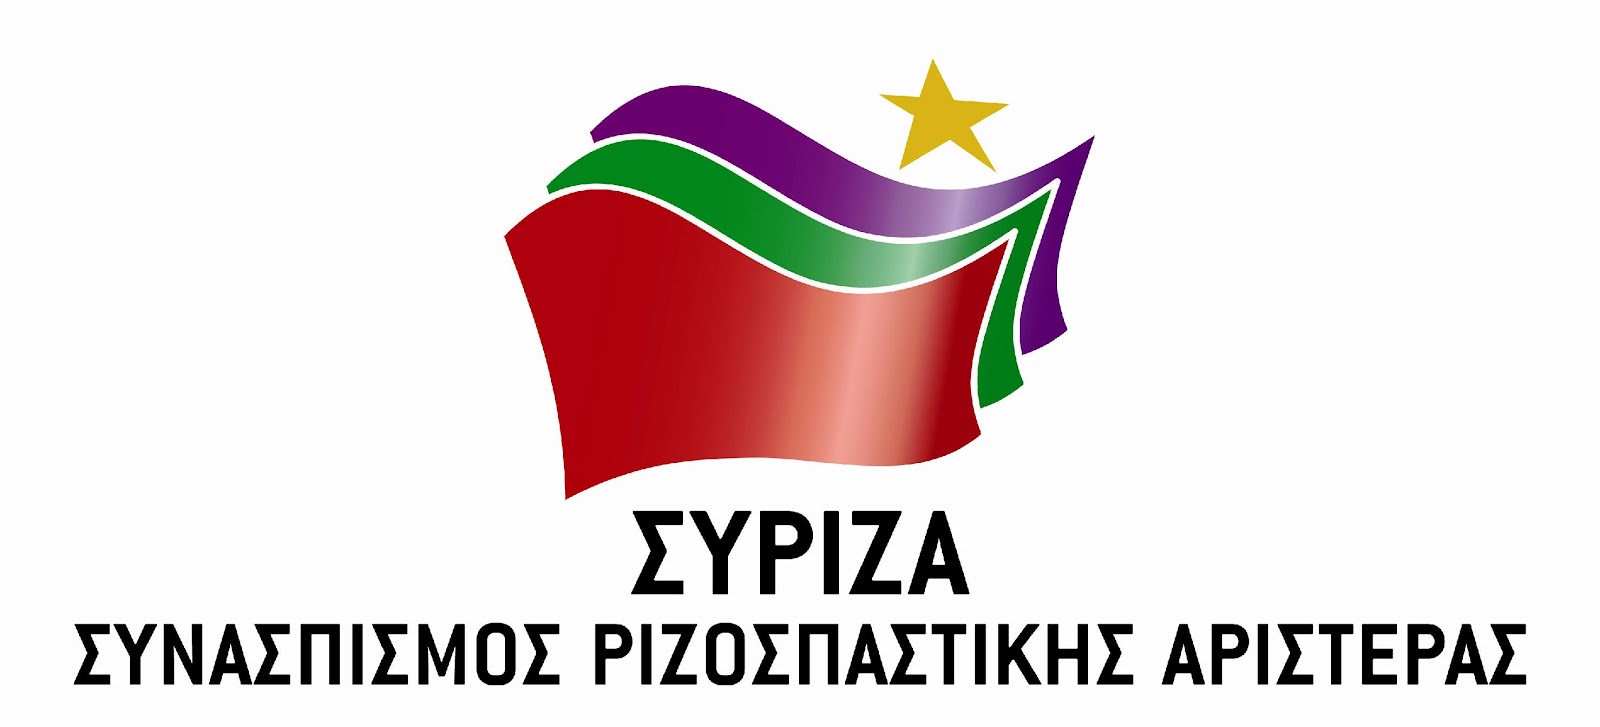 C:\Documents and Settings\Admin\Επιφάνεια εργασίας\logo_syriza.jpg